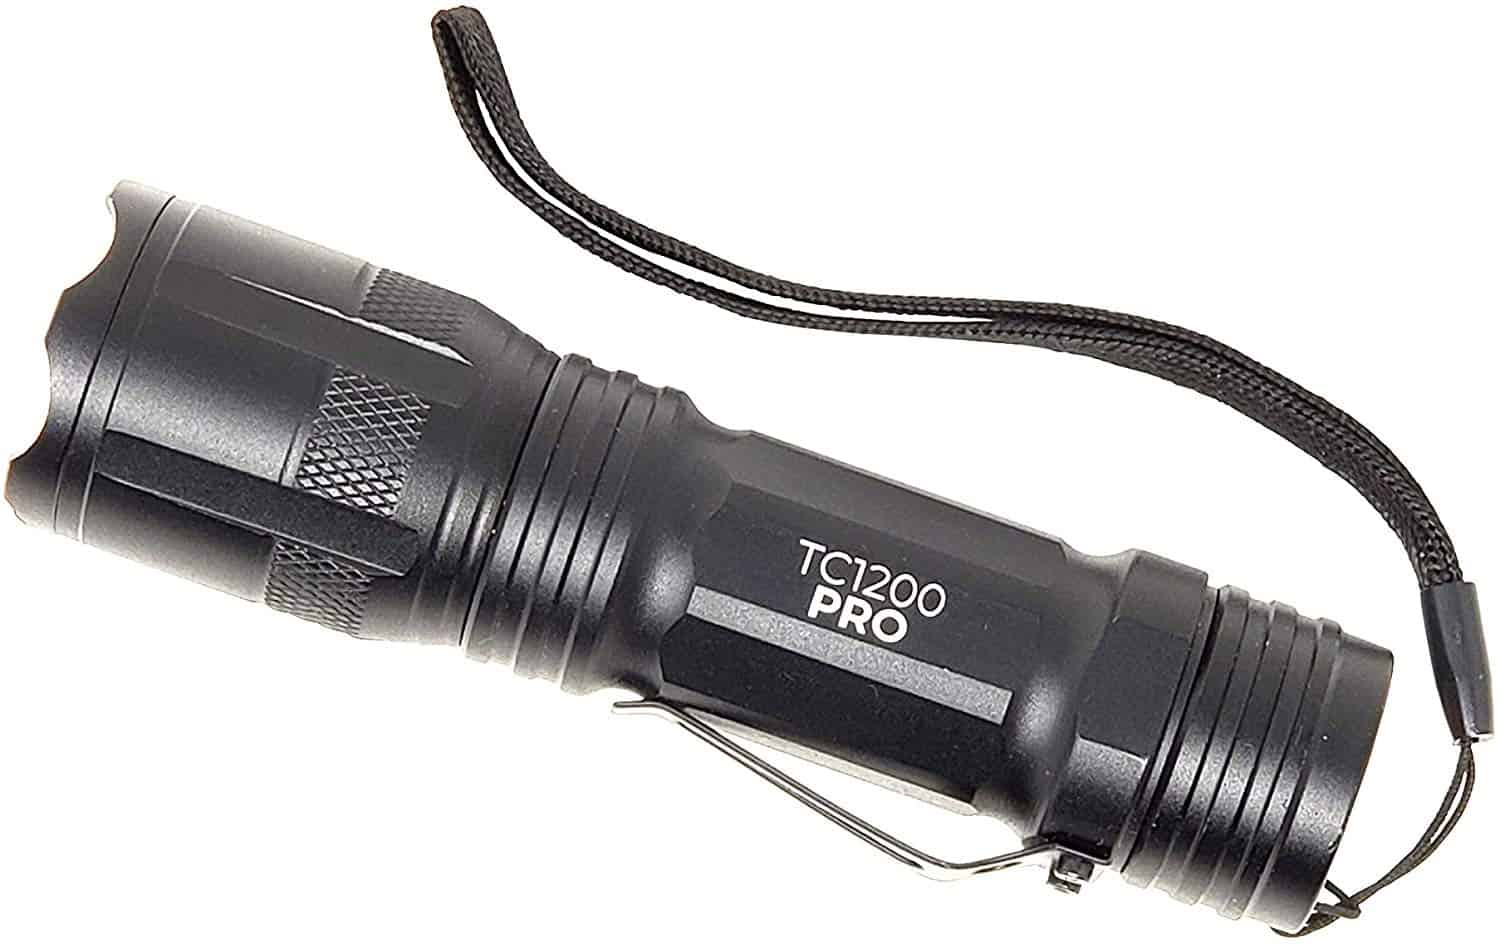 1Tac TC1200 Pro Flashlight​